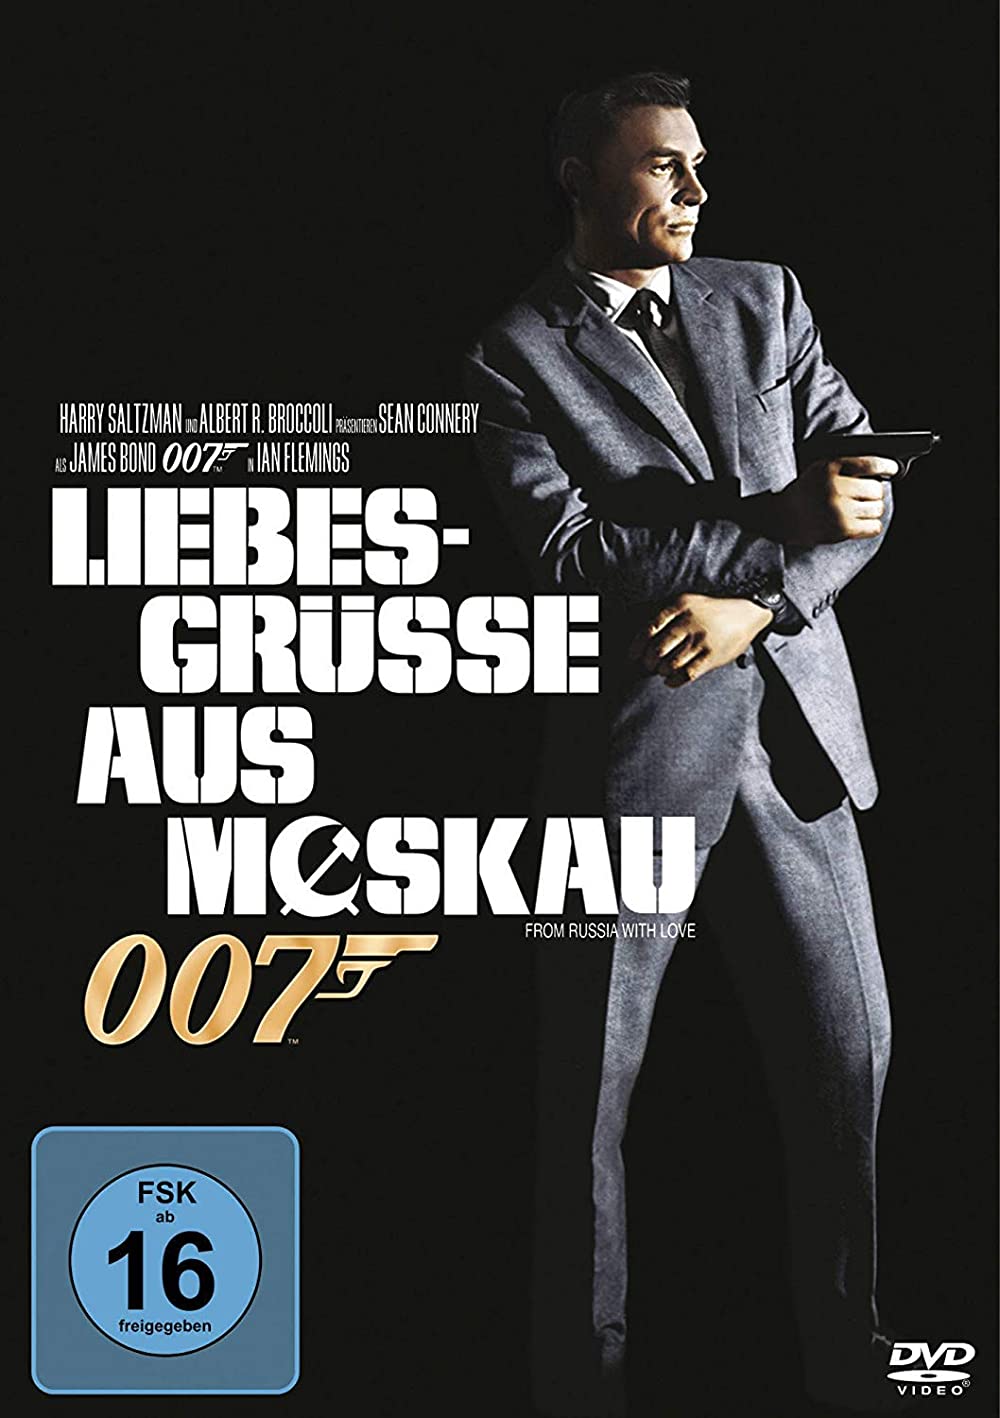 Filmbeschreibung zu James Bond - Liebesgrüße aus Moskau